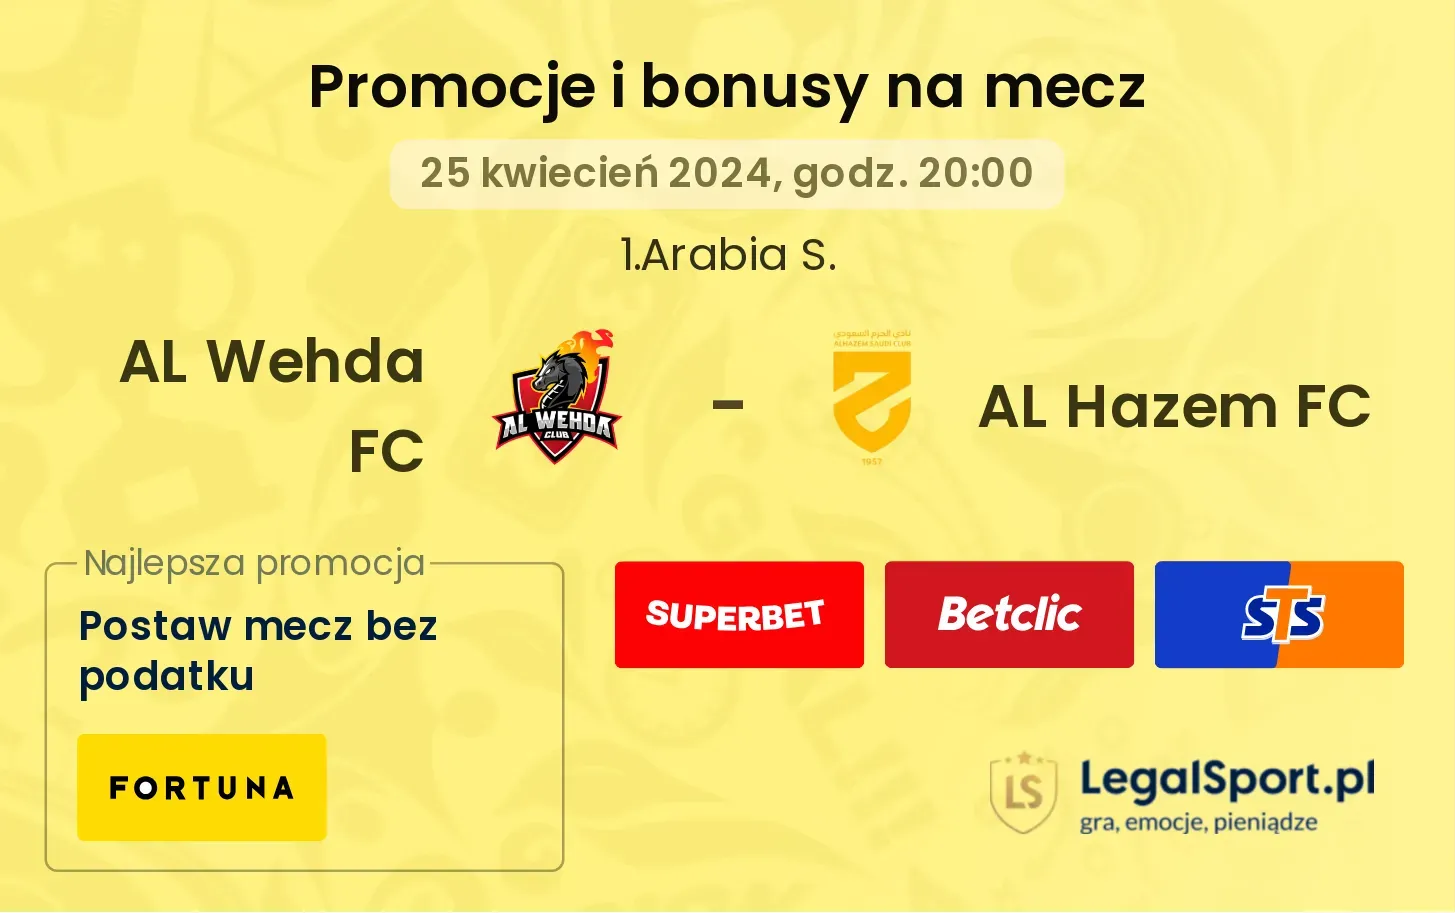 AL Wehda FC - AL Hazem FC promocje bonusy na mecz